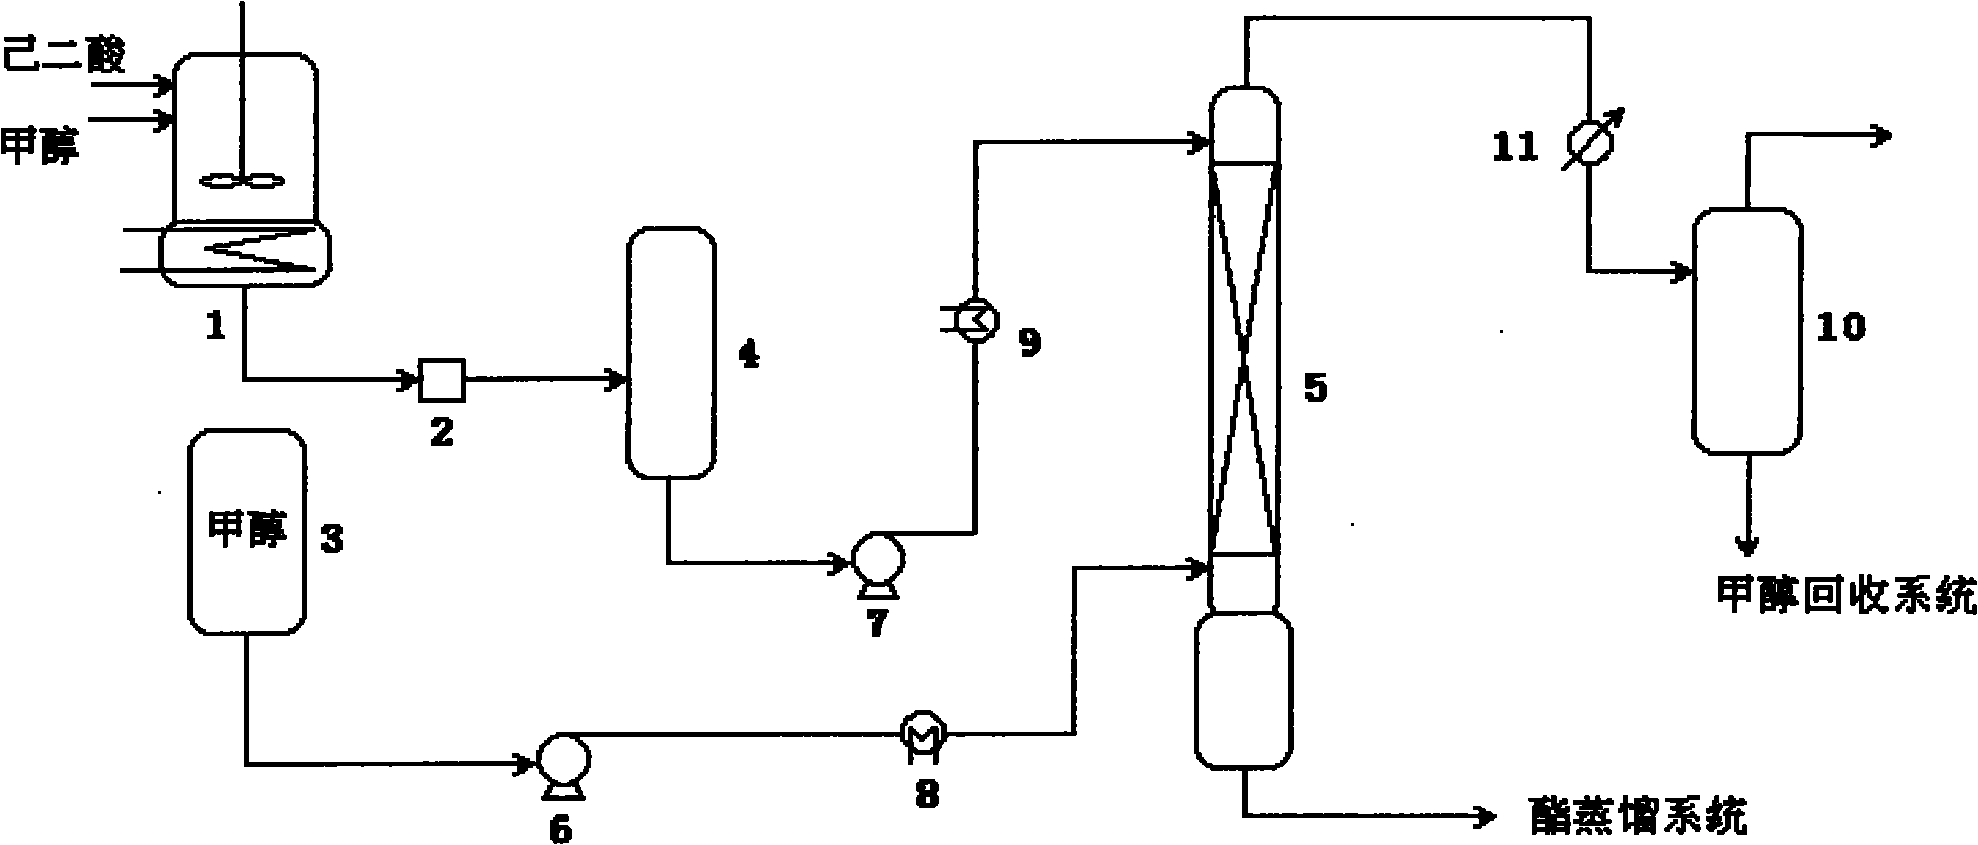 Method for producing 1,6-dimethyl adipate